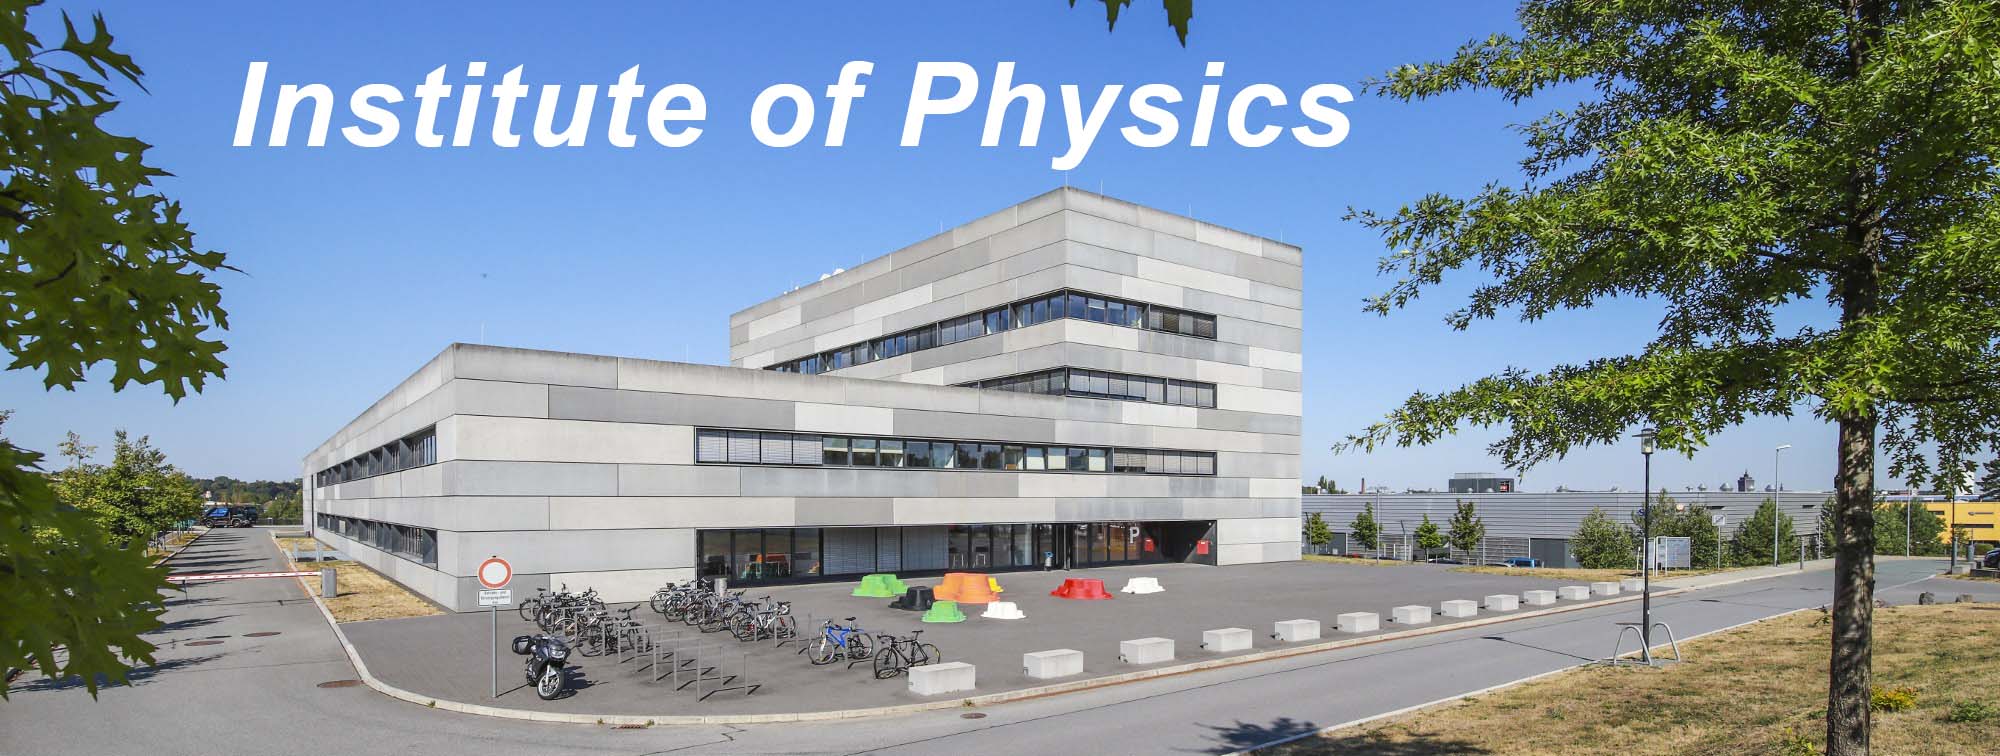 Building of Institute of Physics 2018